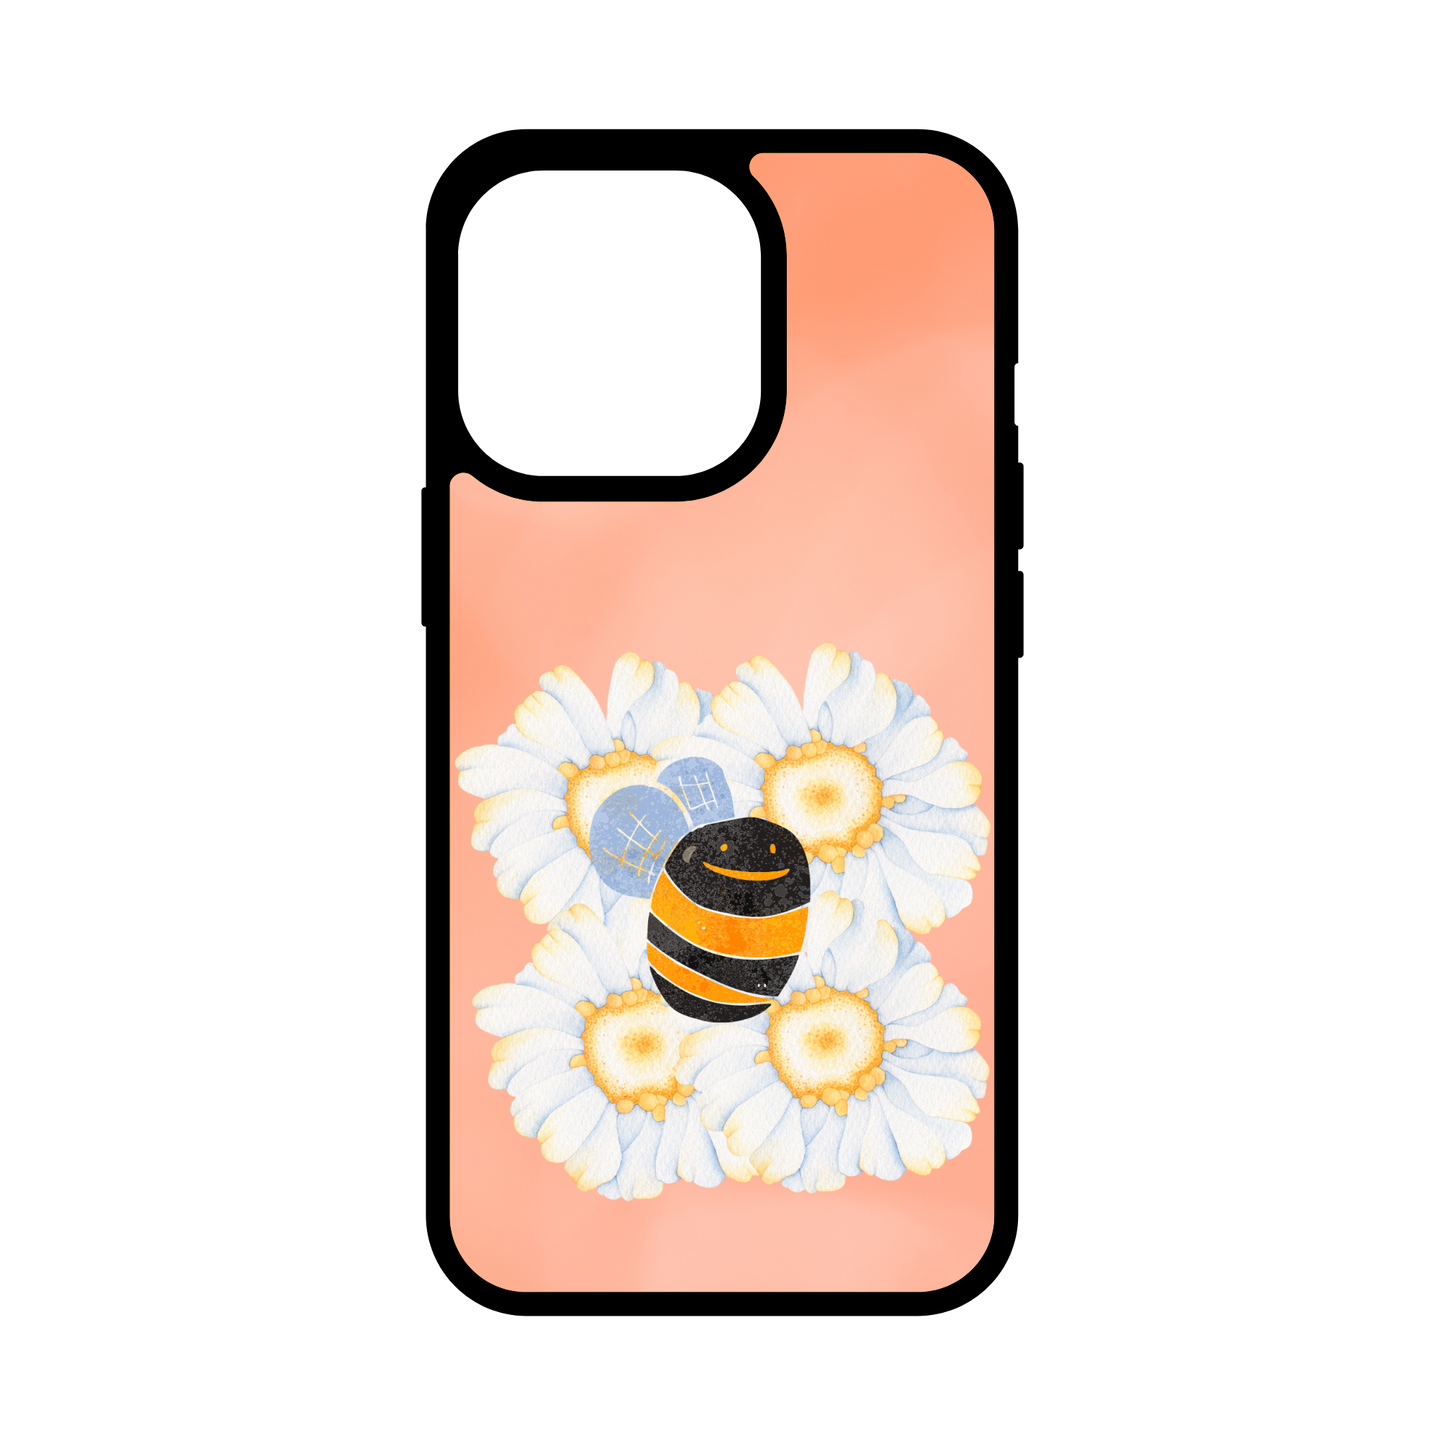 7.Bee